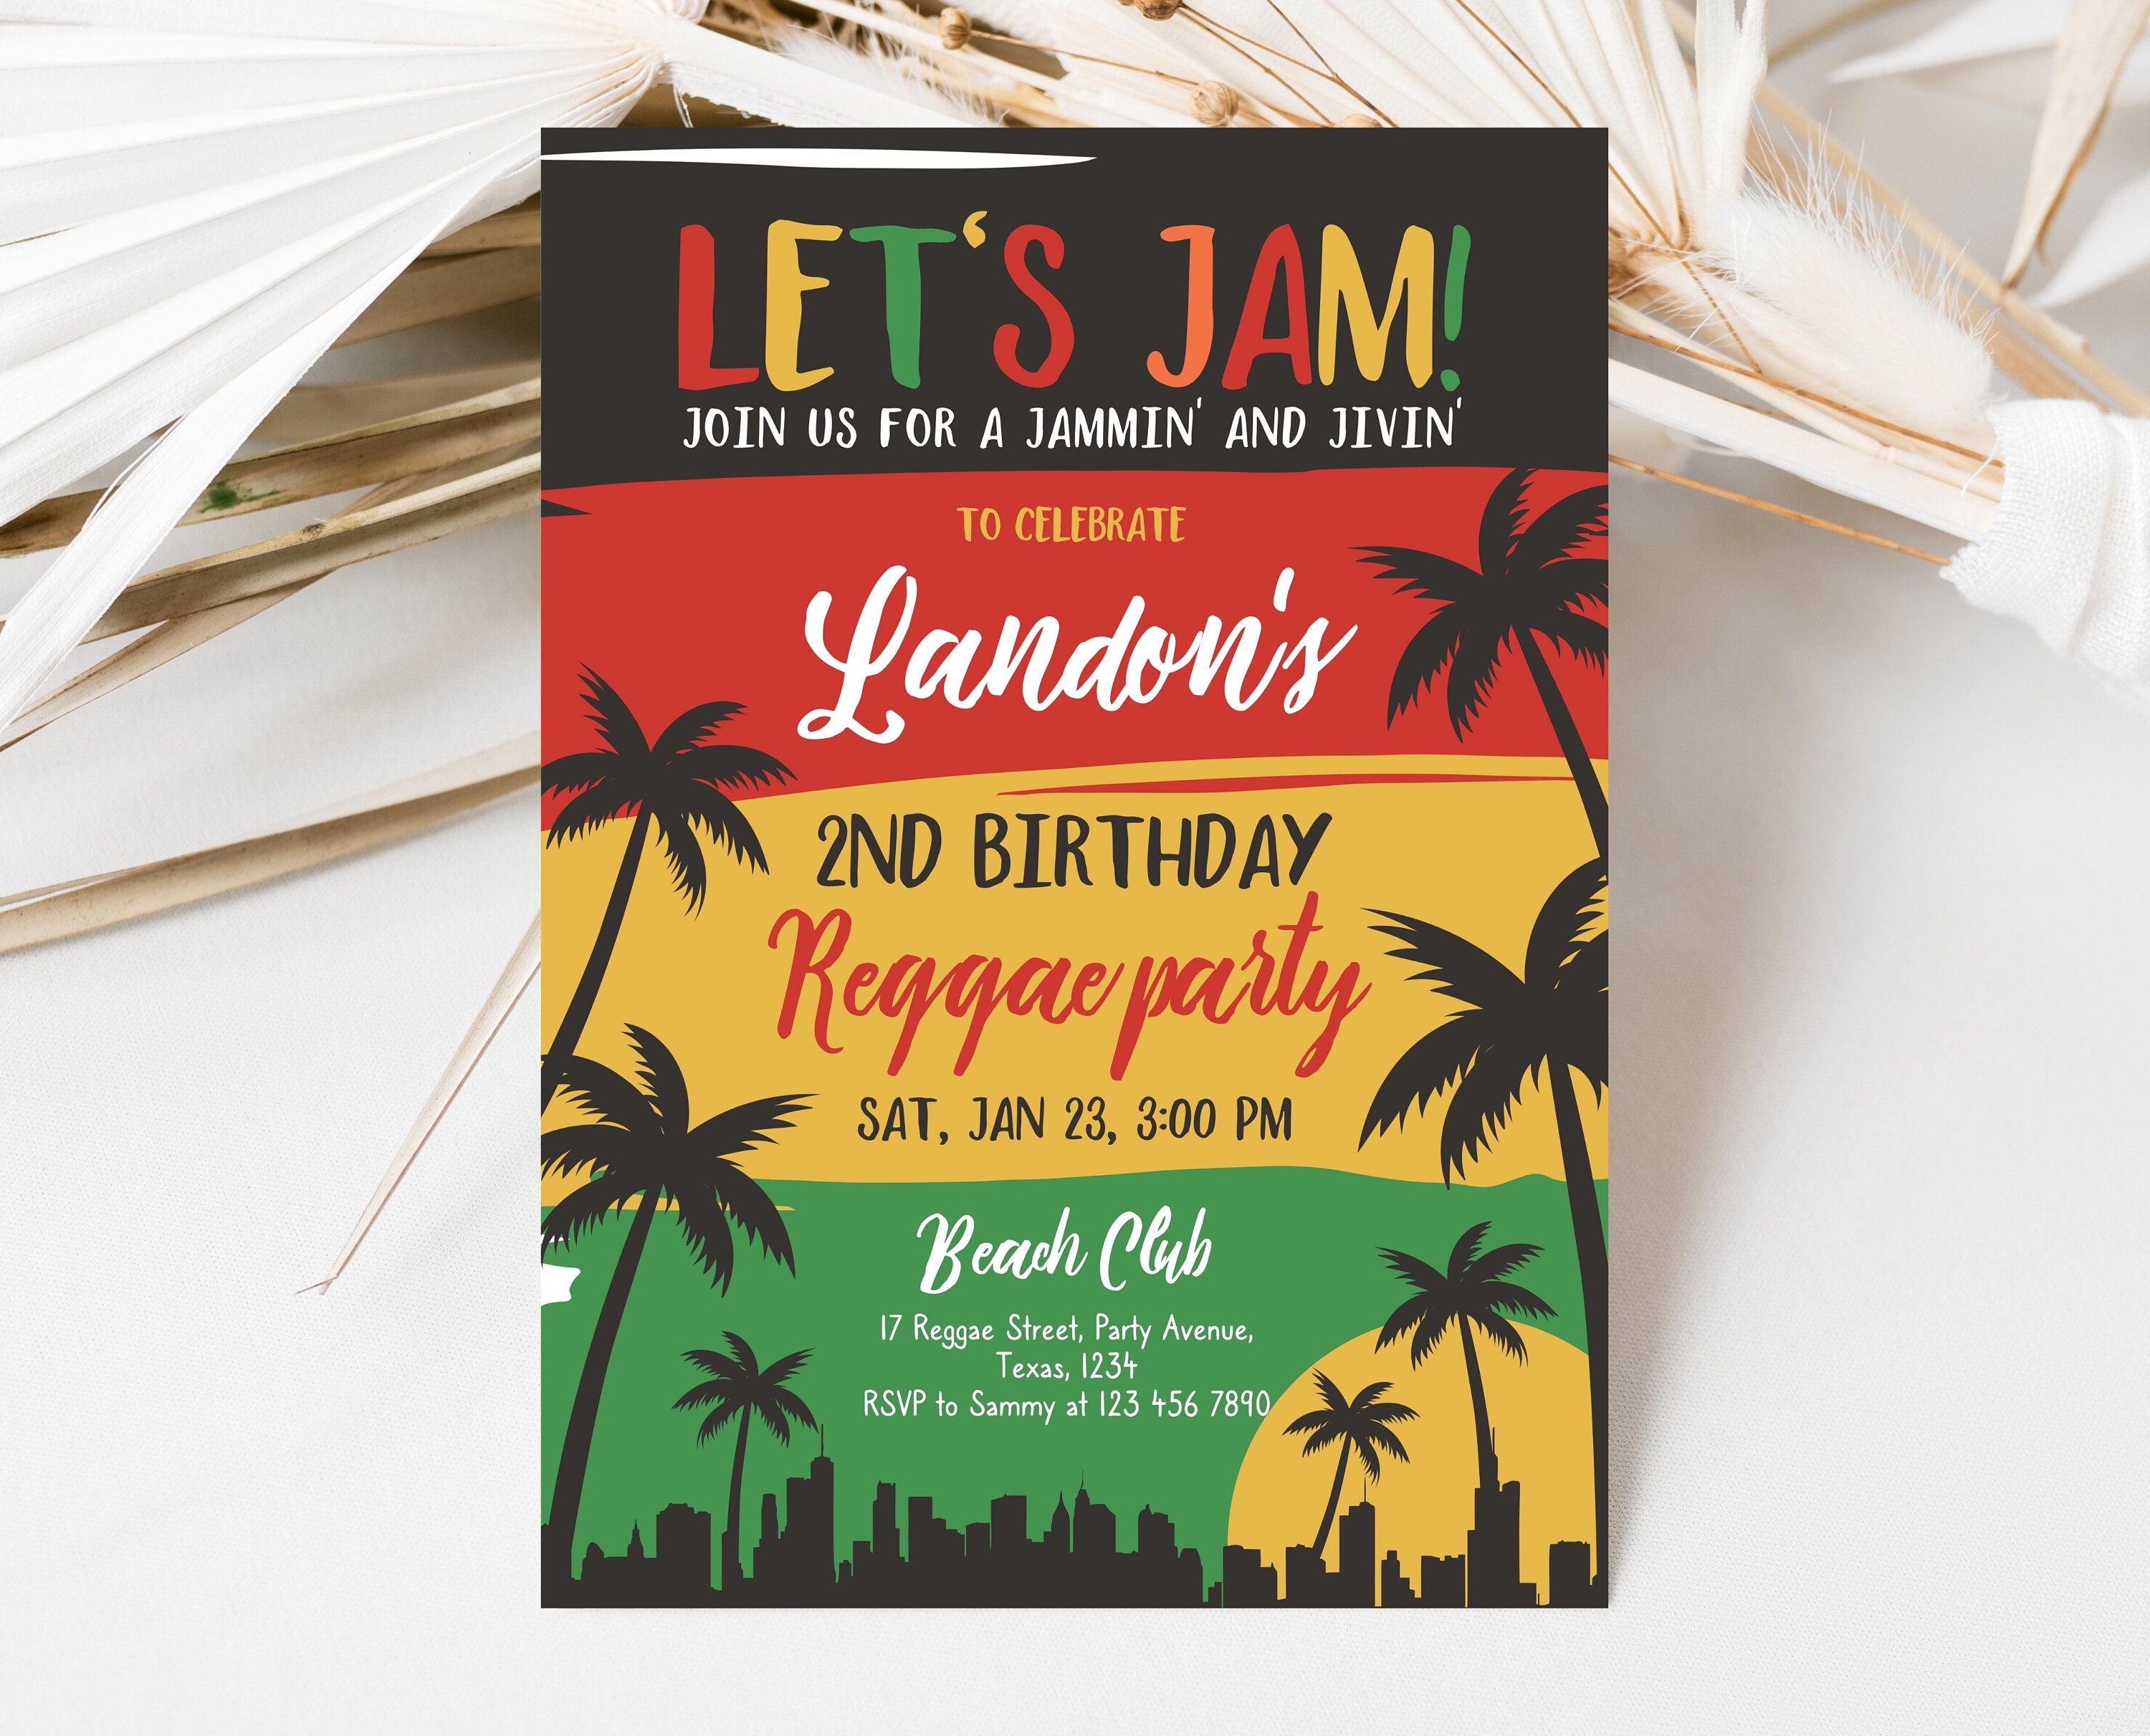 Jamaica Theme Party 